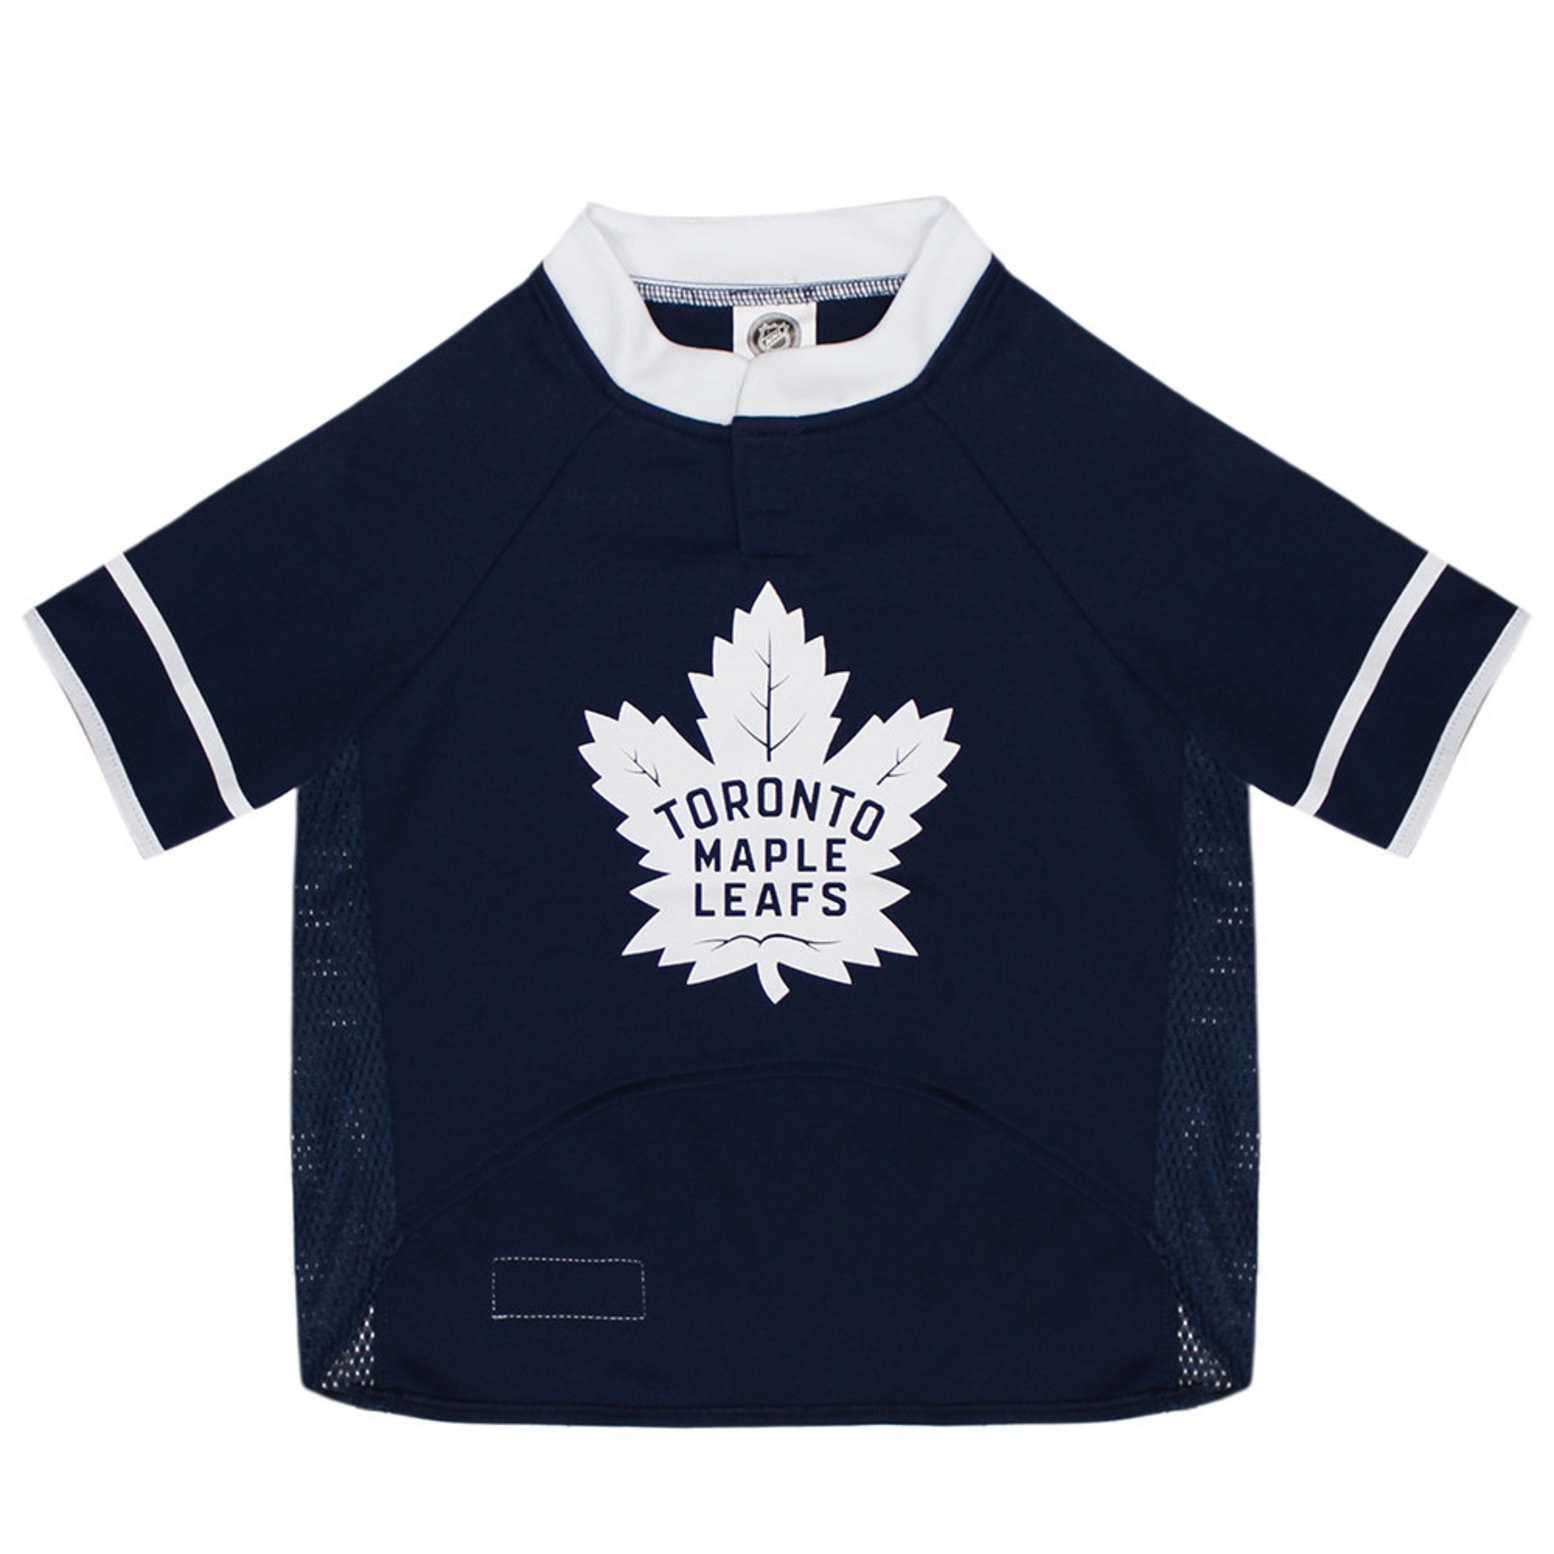 Cheap Toronto Maple Leafs Apparel, Discount Maple Leafs Gear